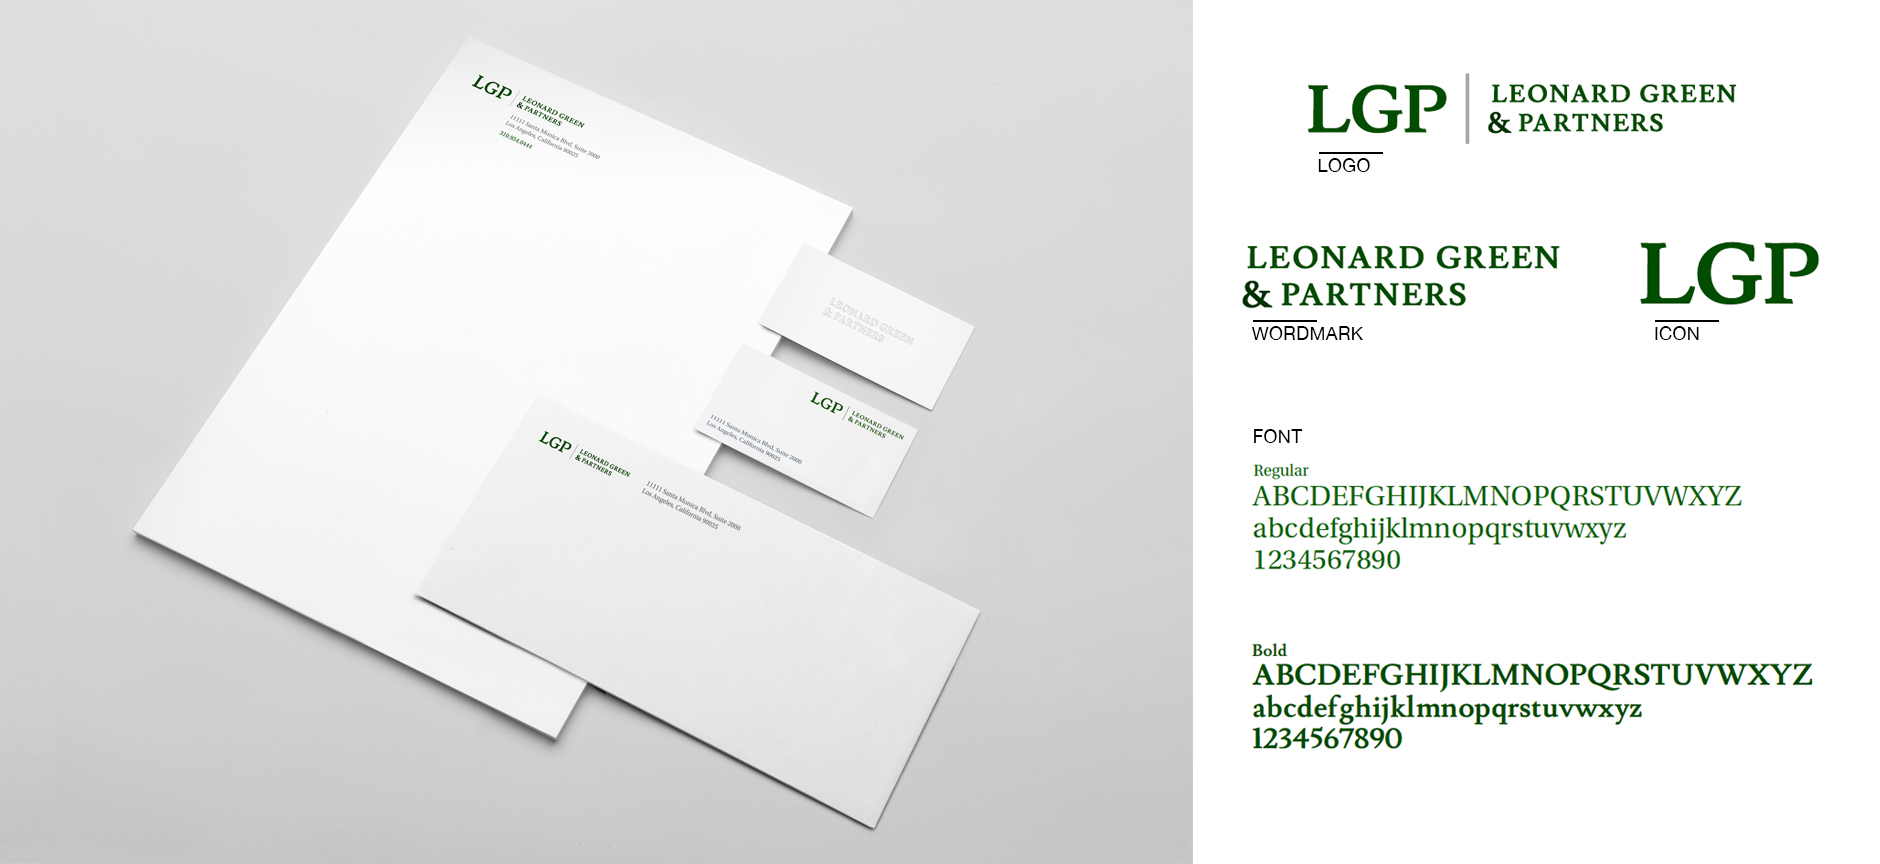 marq-leonard-green-partners-branding